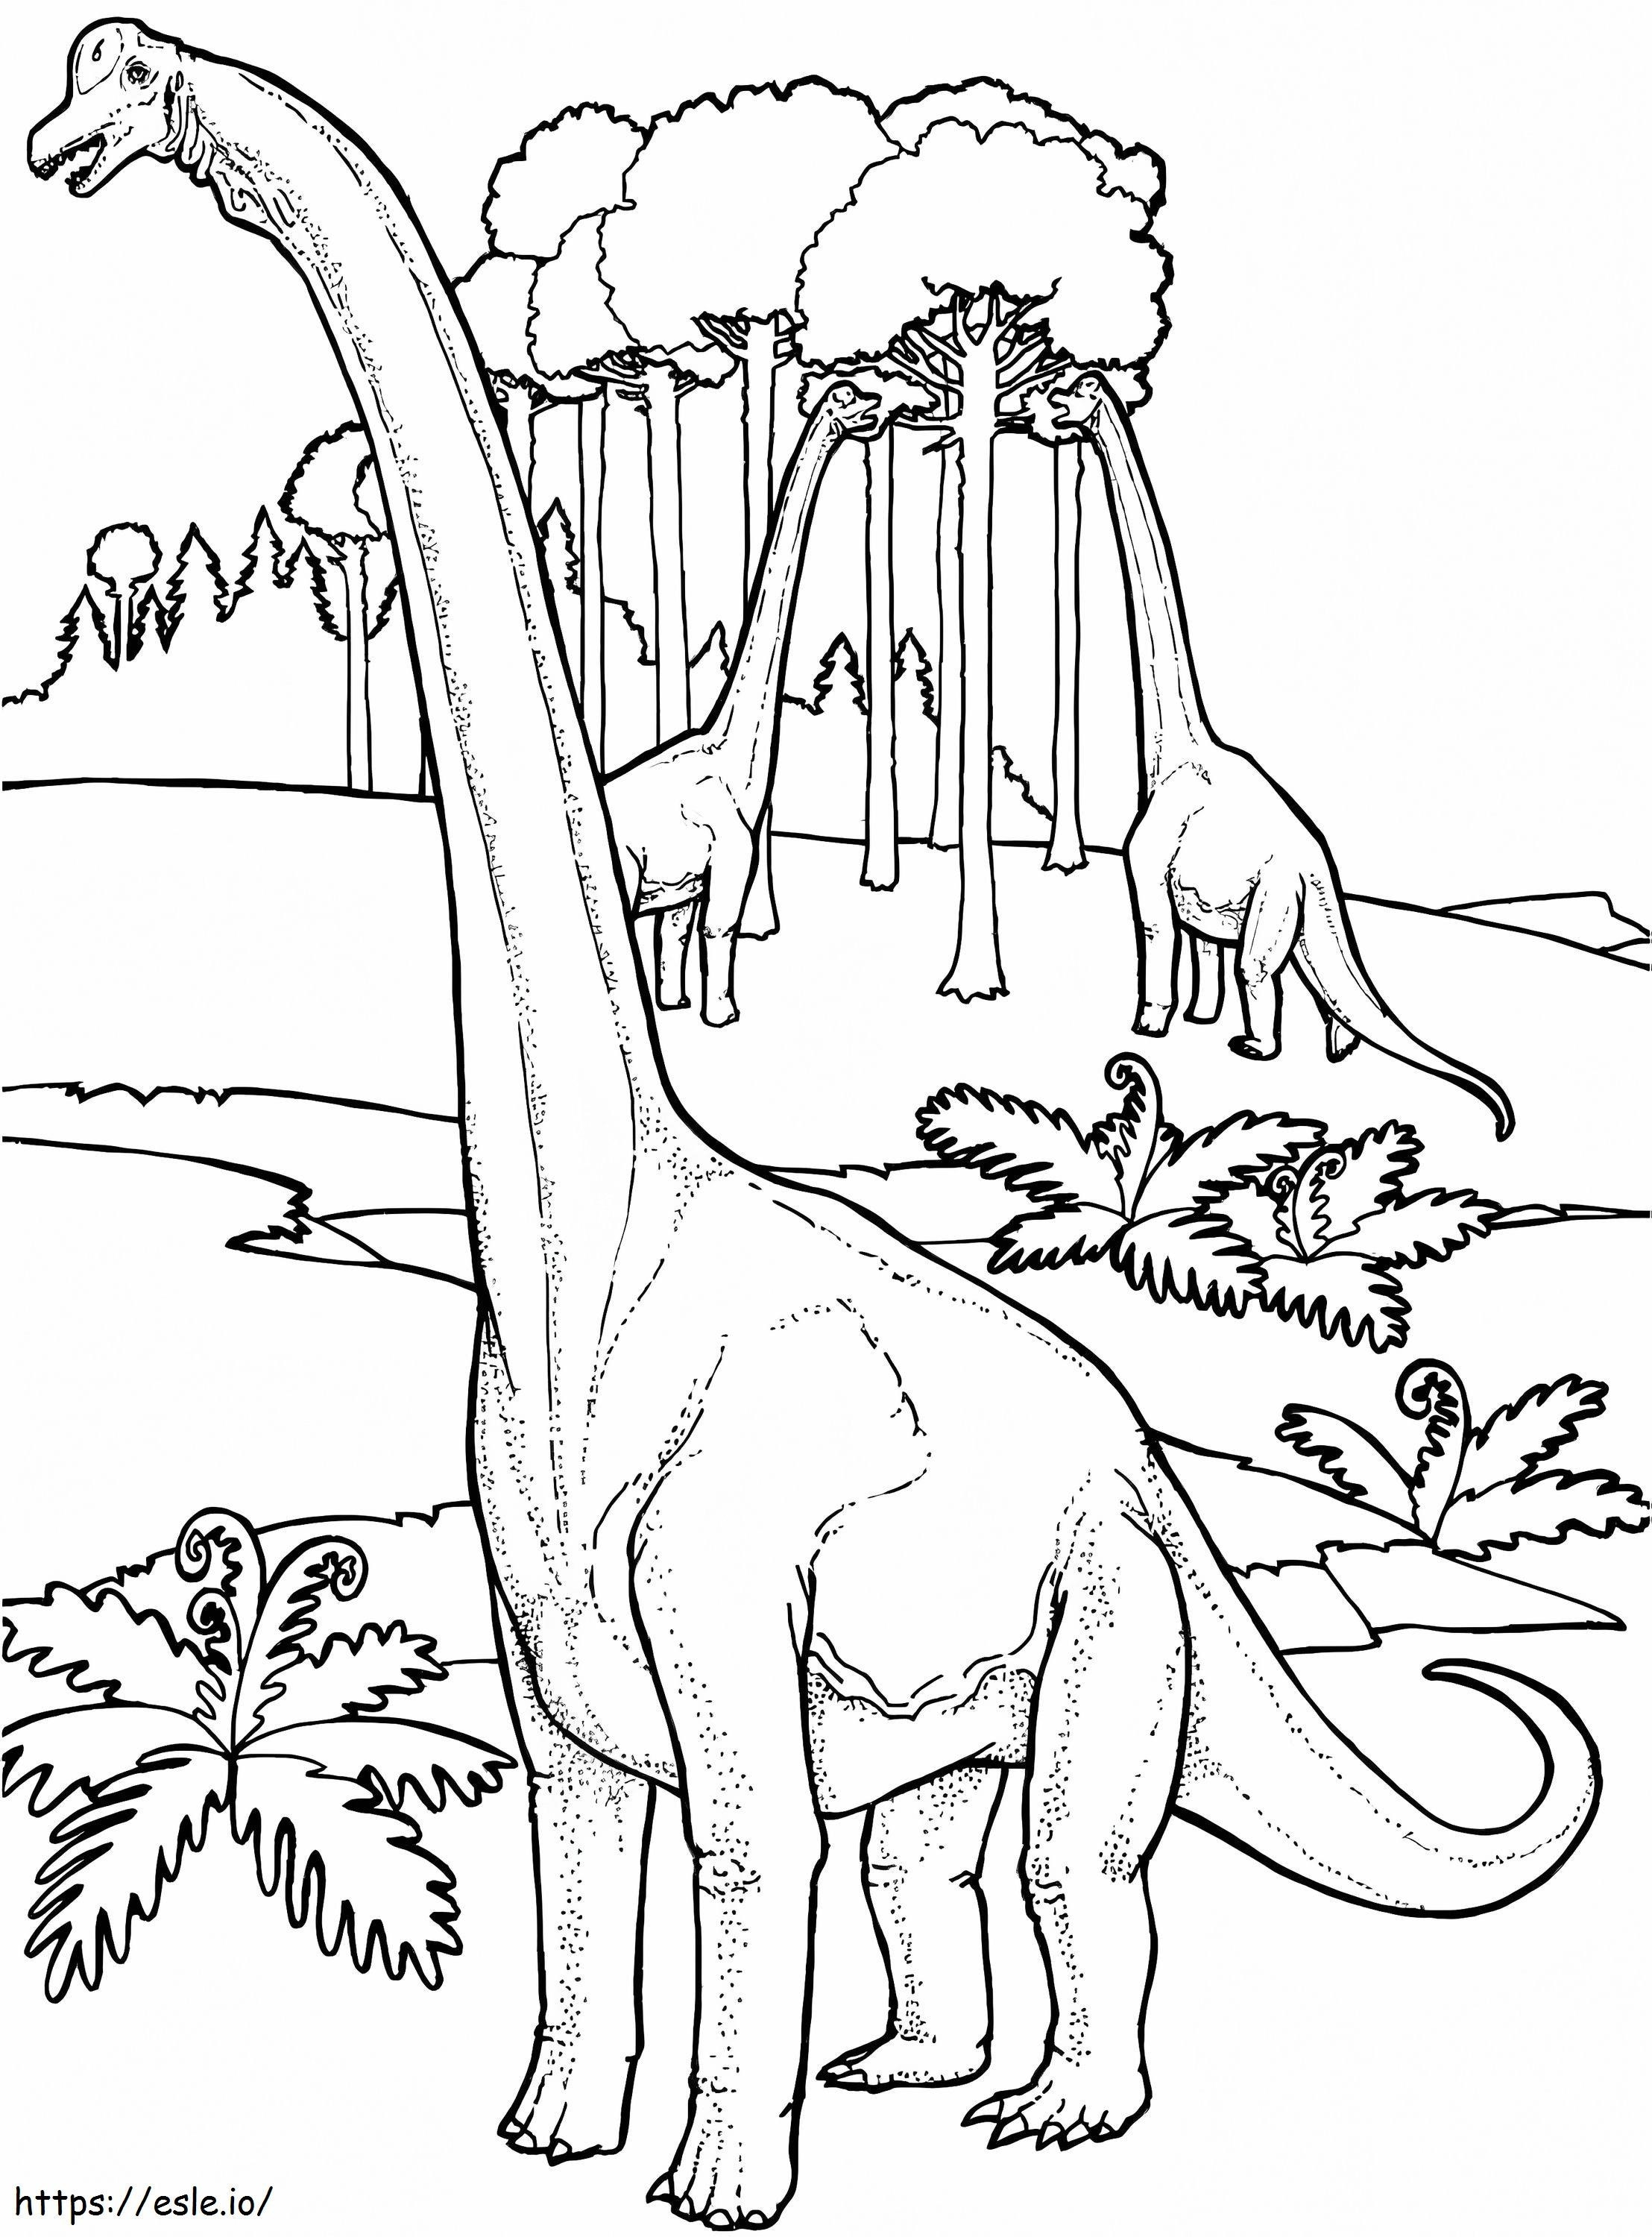 Brachiosaurus 3 coloring page